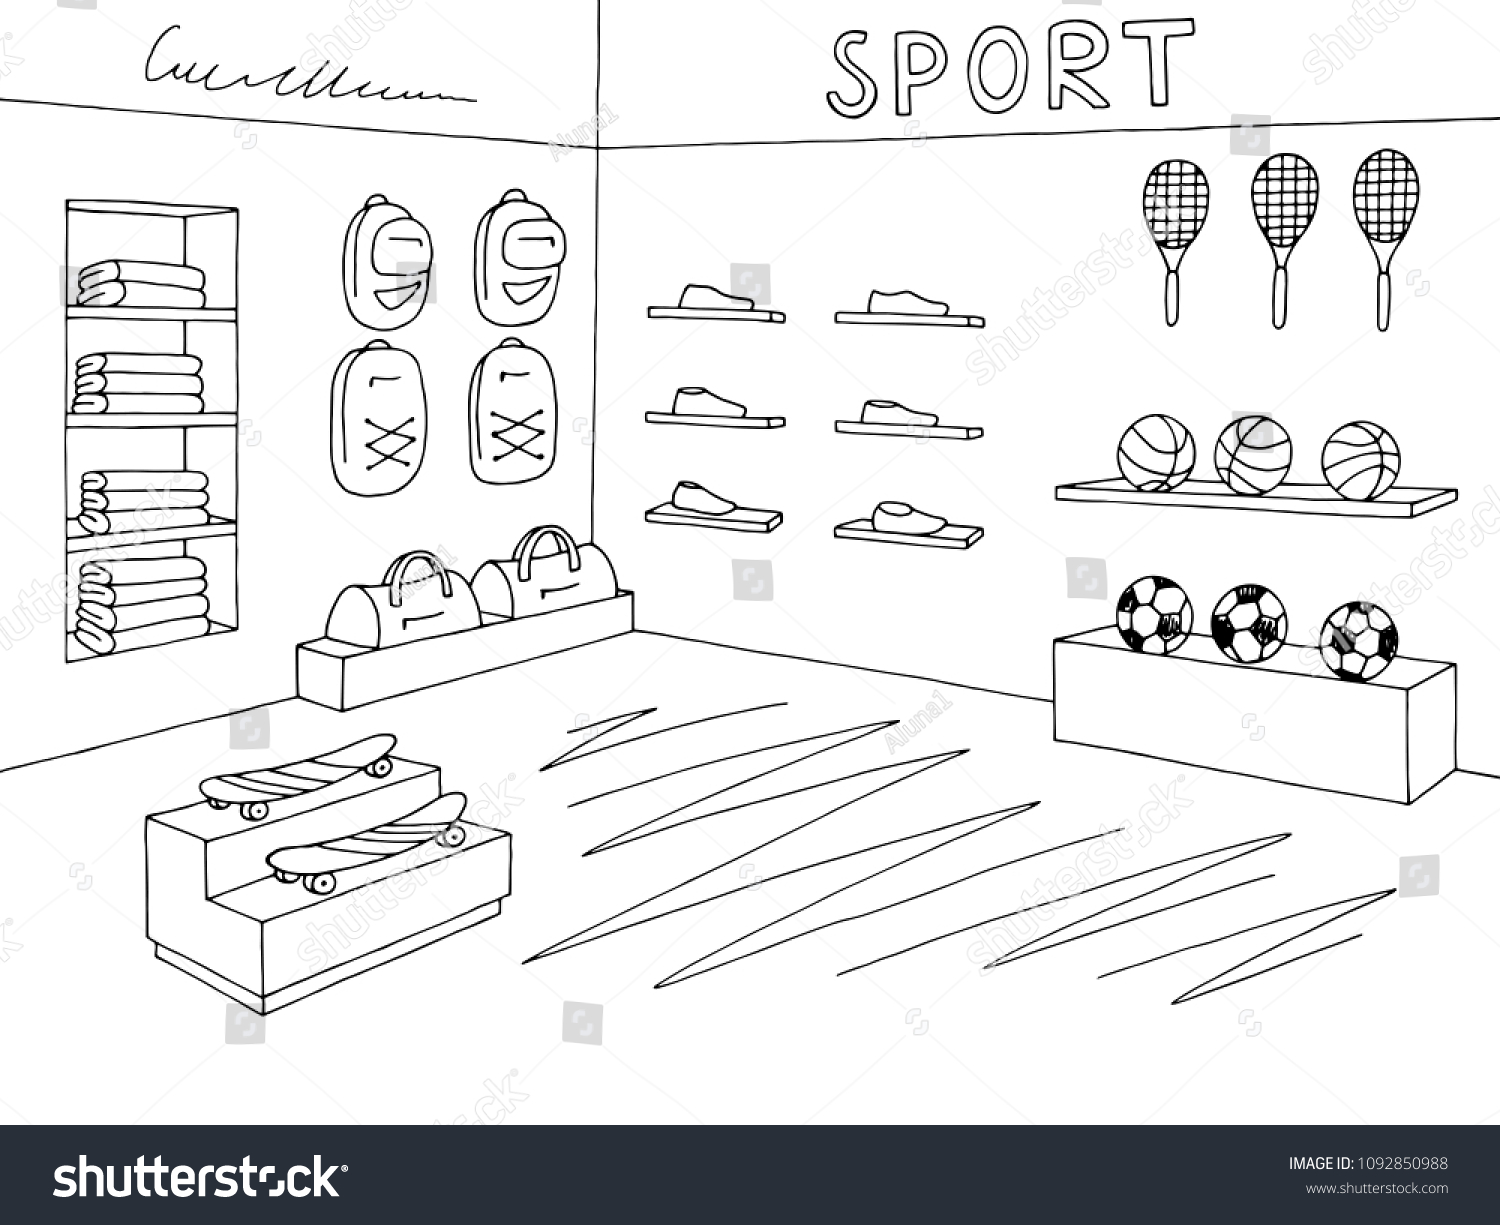 3,419 Shoe store sketch Images, Stock Photos & Vectors Shutterstock